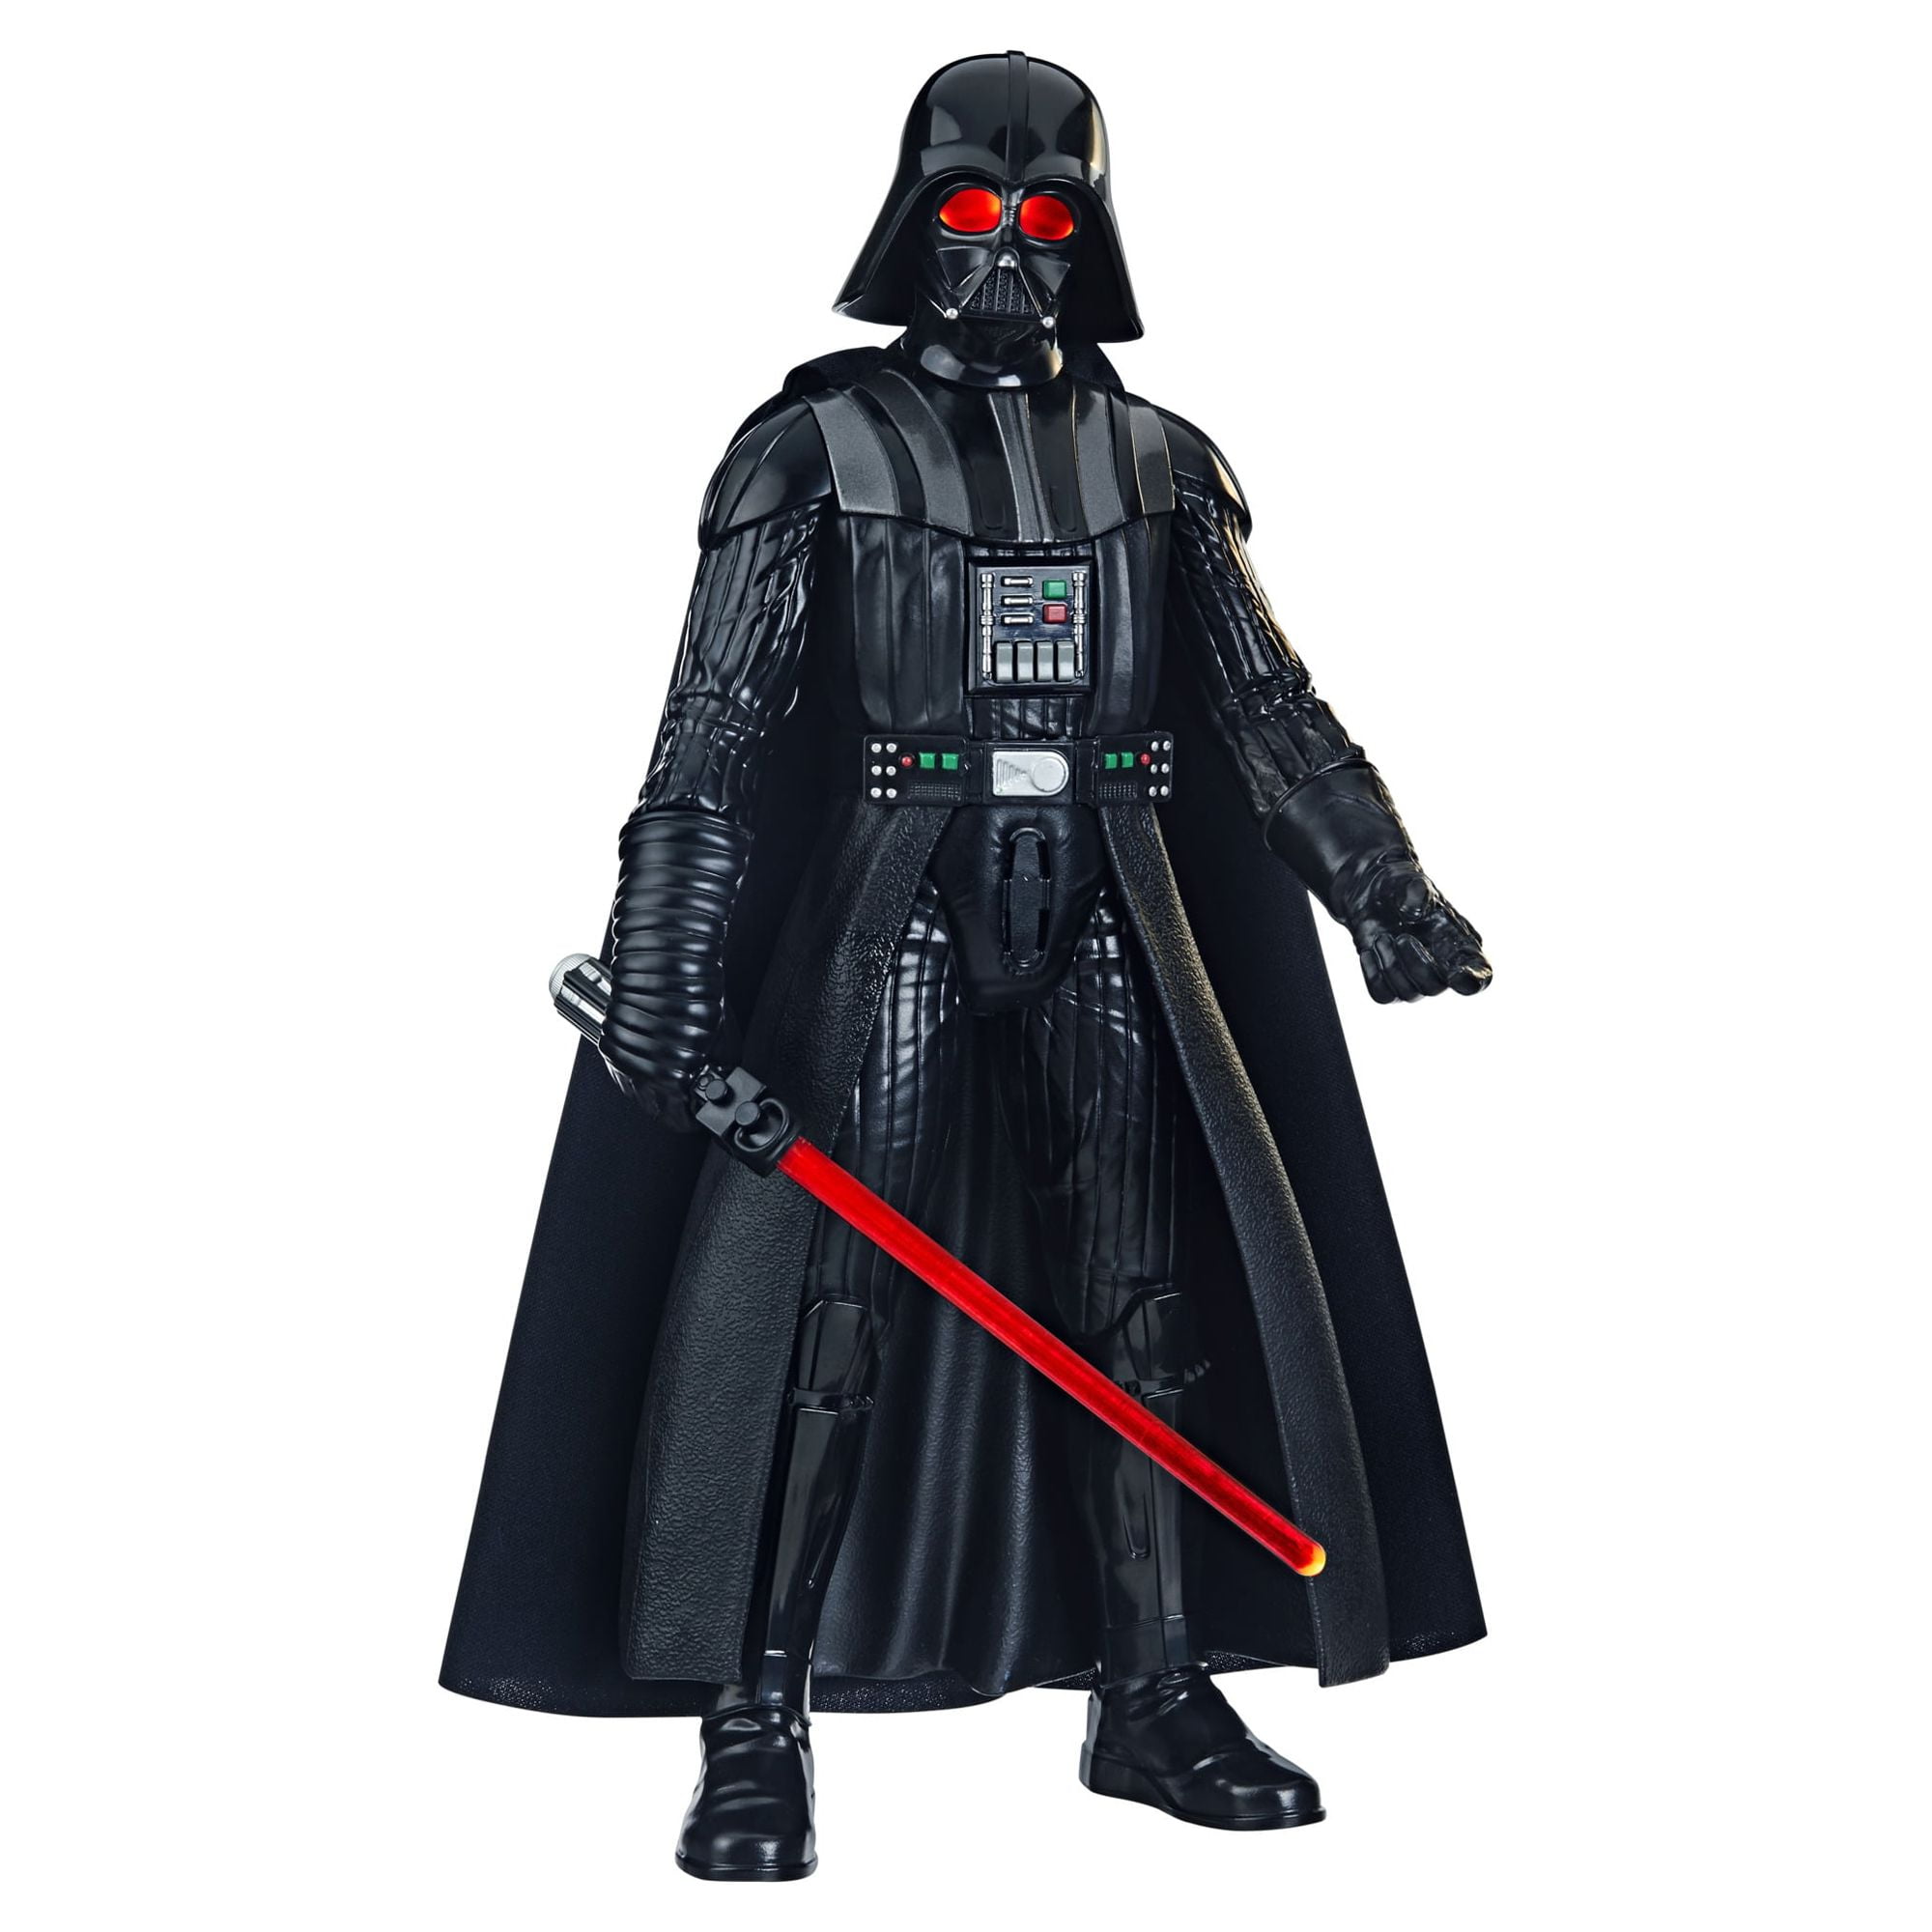 Star Wars: Obi-Wan Kenobi Darth Vader Toy Action Figure for Boys